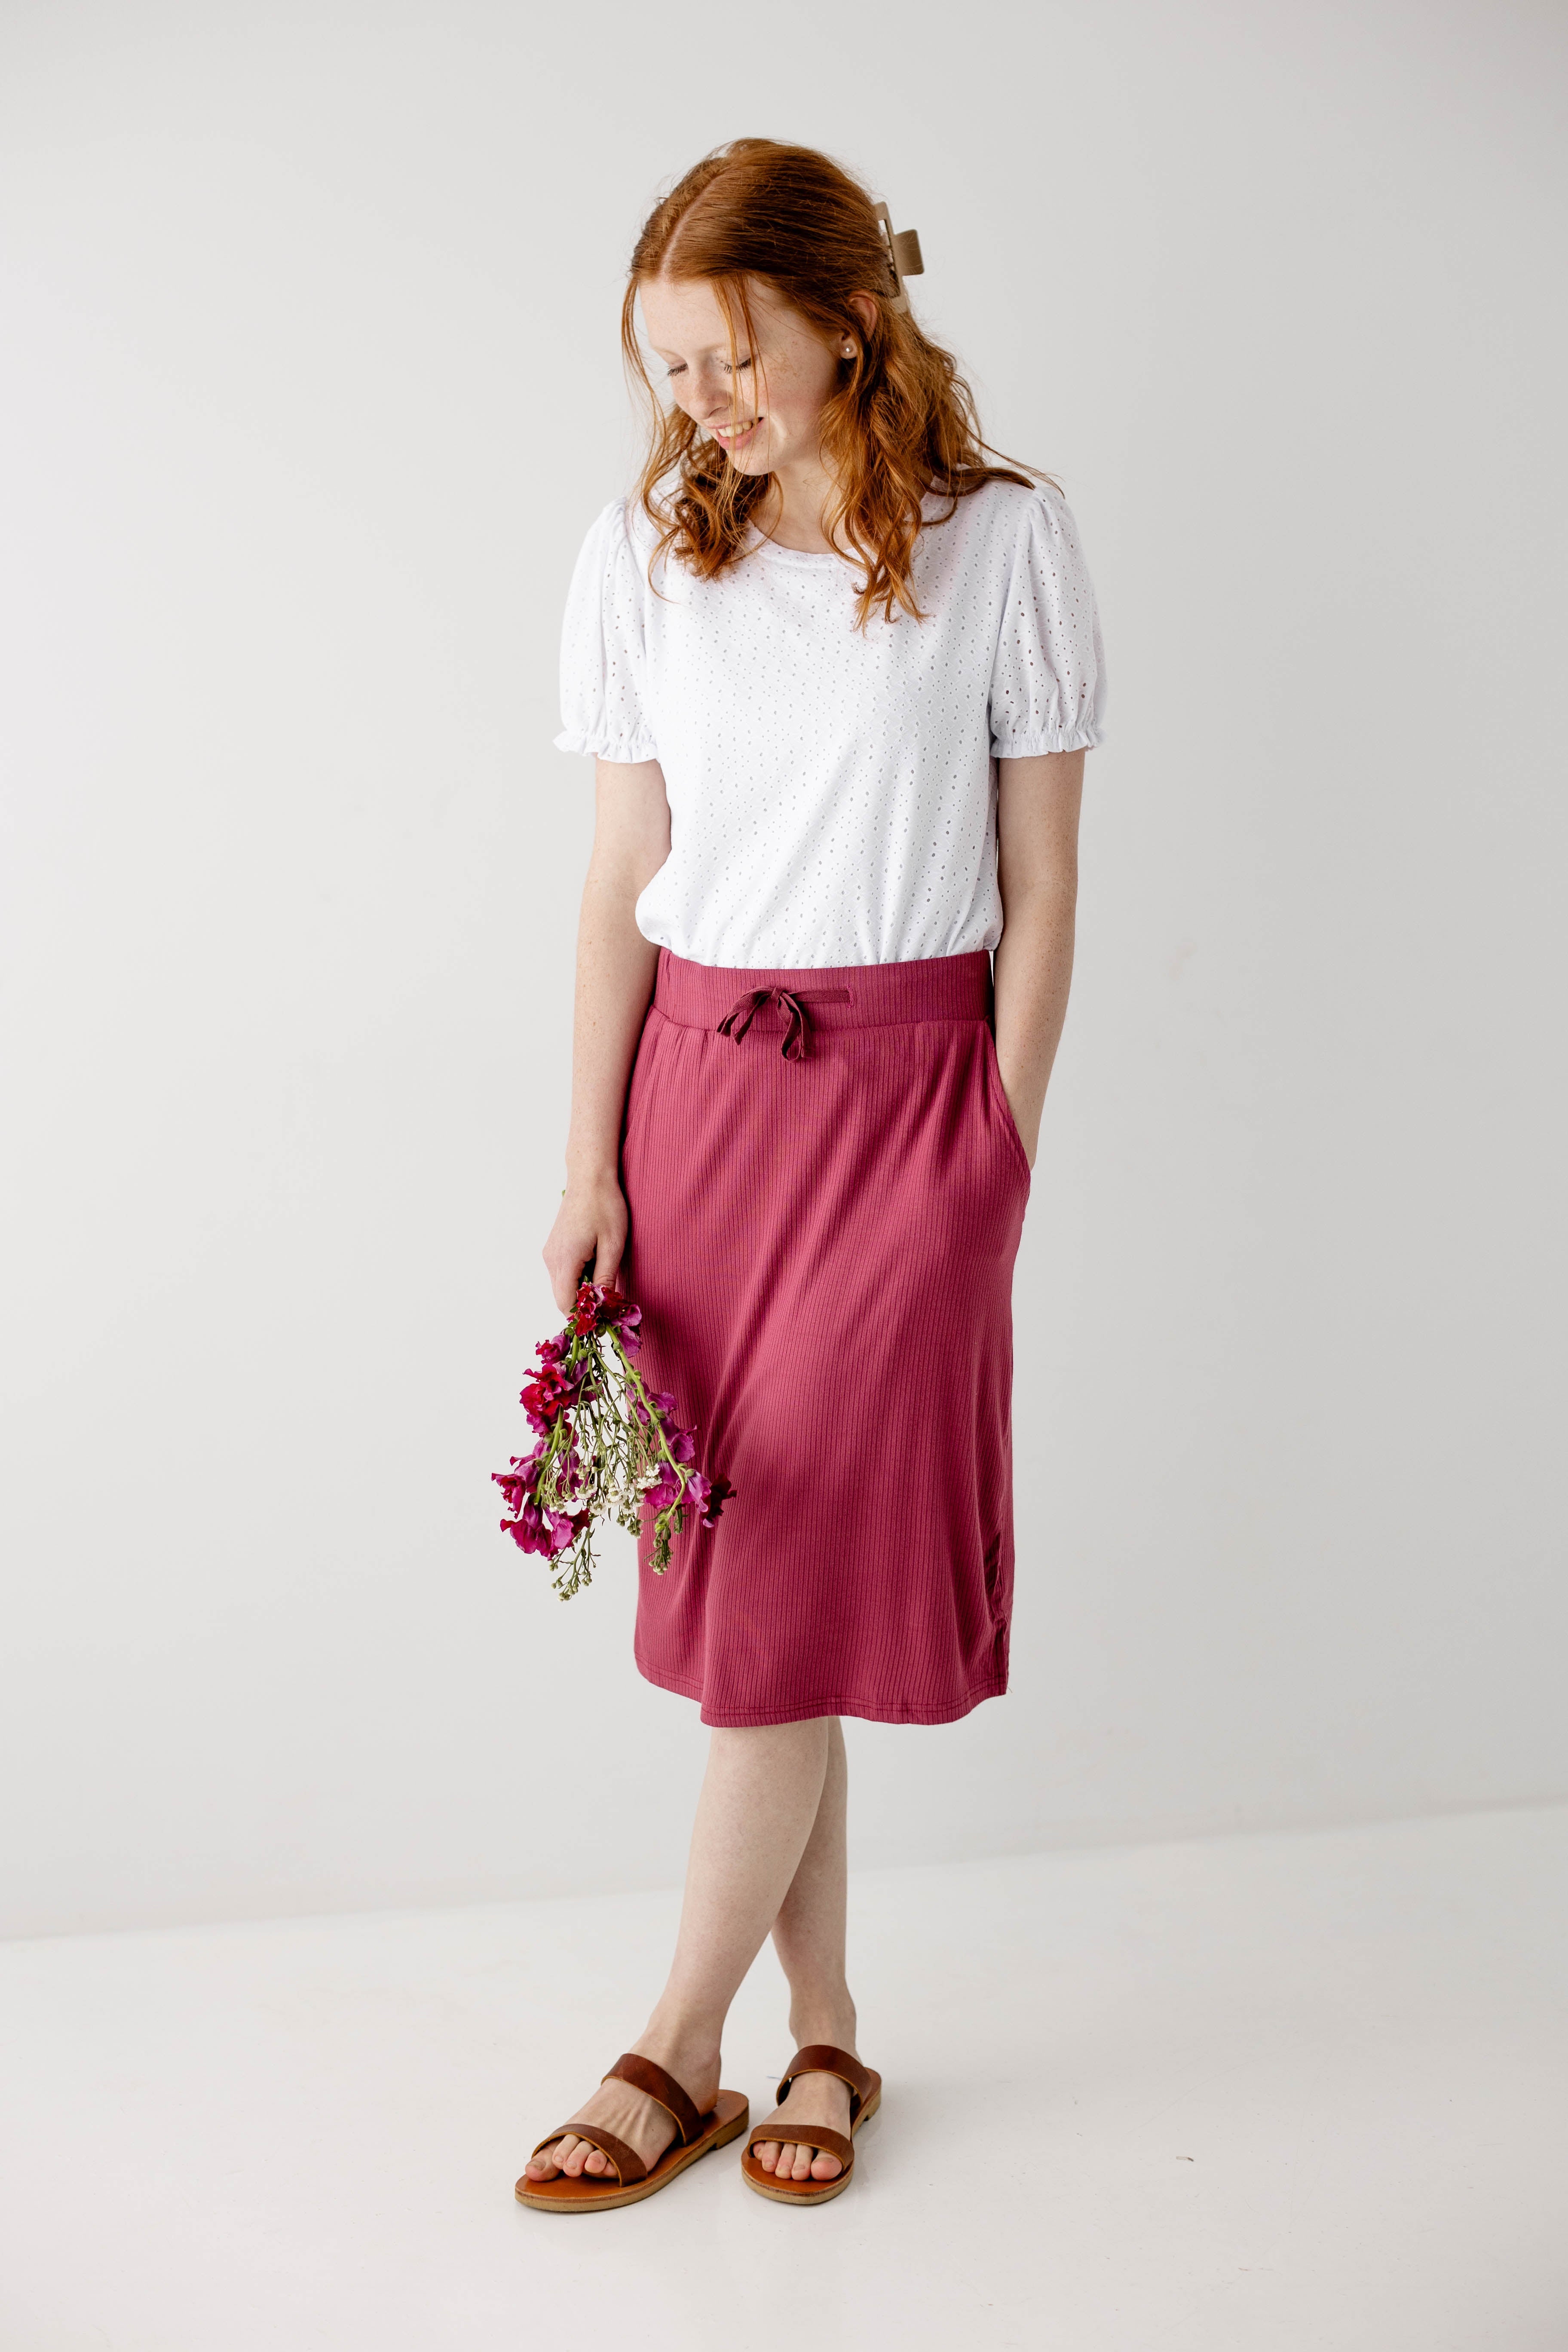 Lauren' Everyday Ribbed Knit Skirt in Dusty Fuchsia FINAL SALE